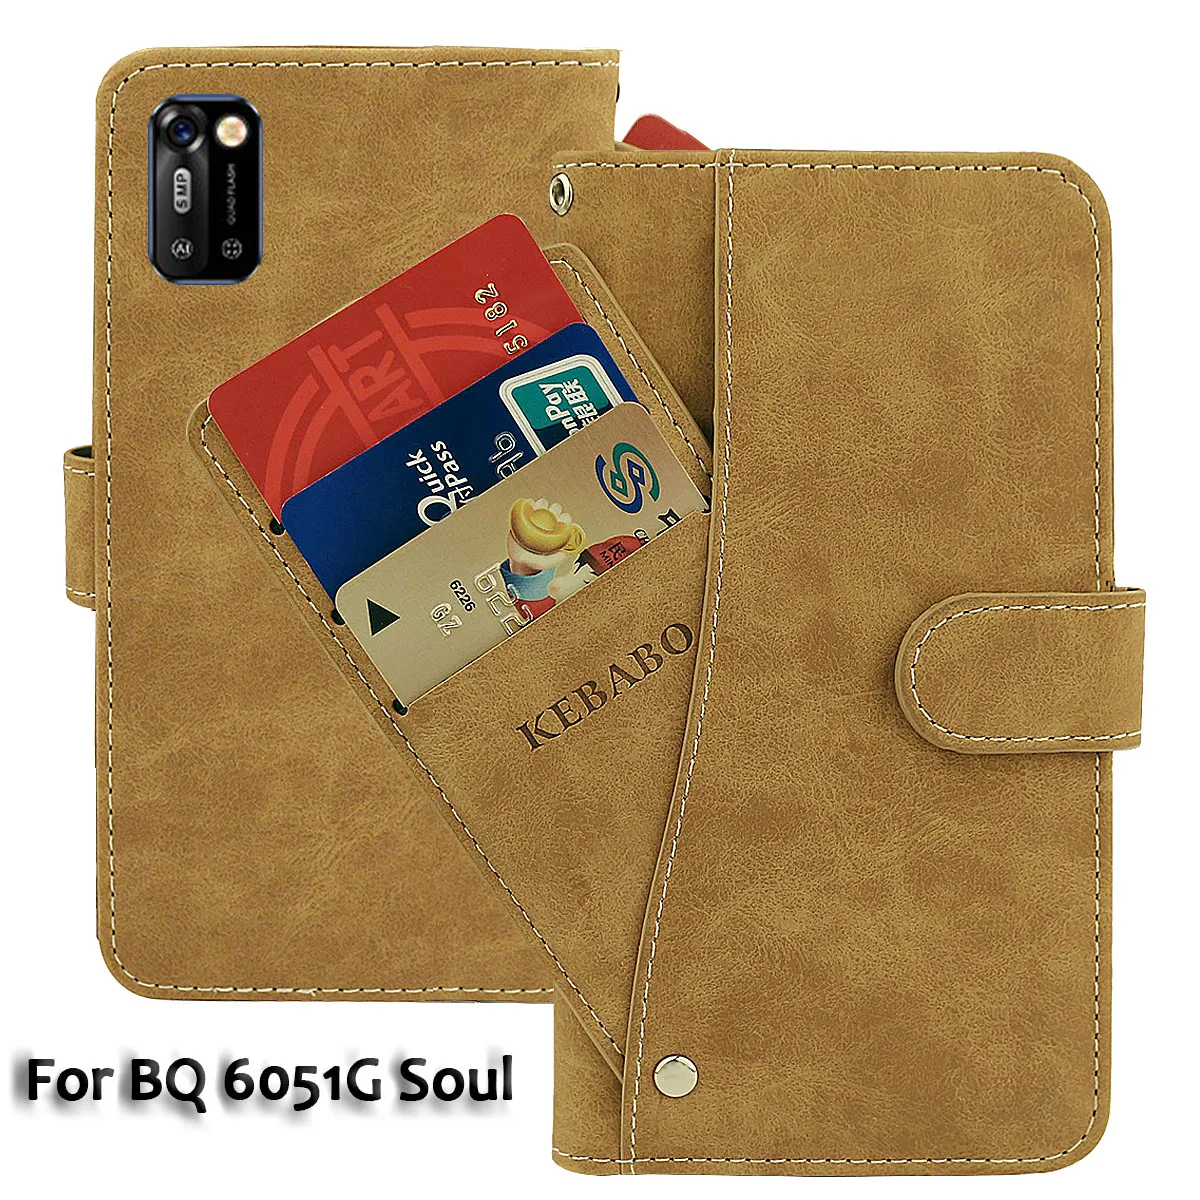 

Vintage Leather Wallet BQ 6051G Soul Case 6.09" Flip Luxury Card Slots Cover Magnet Phone Protective Cases Bags